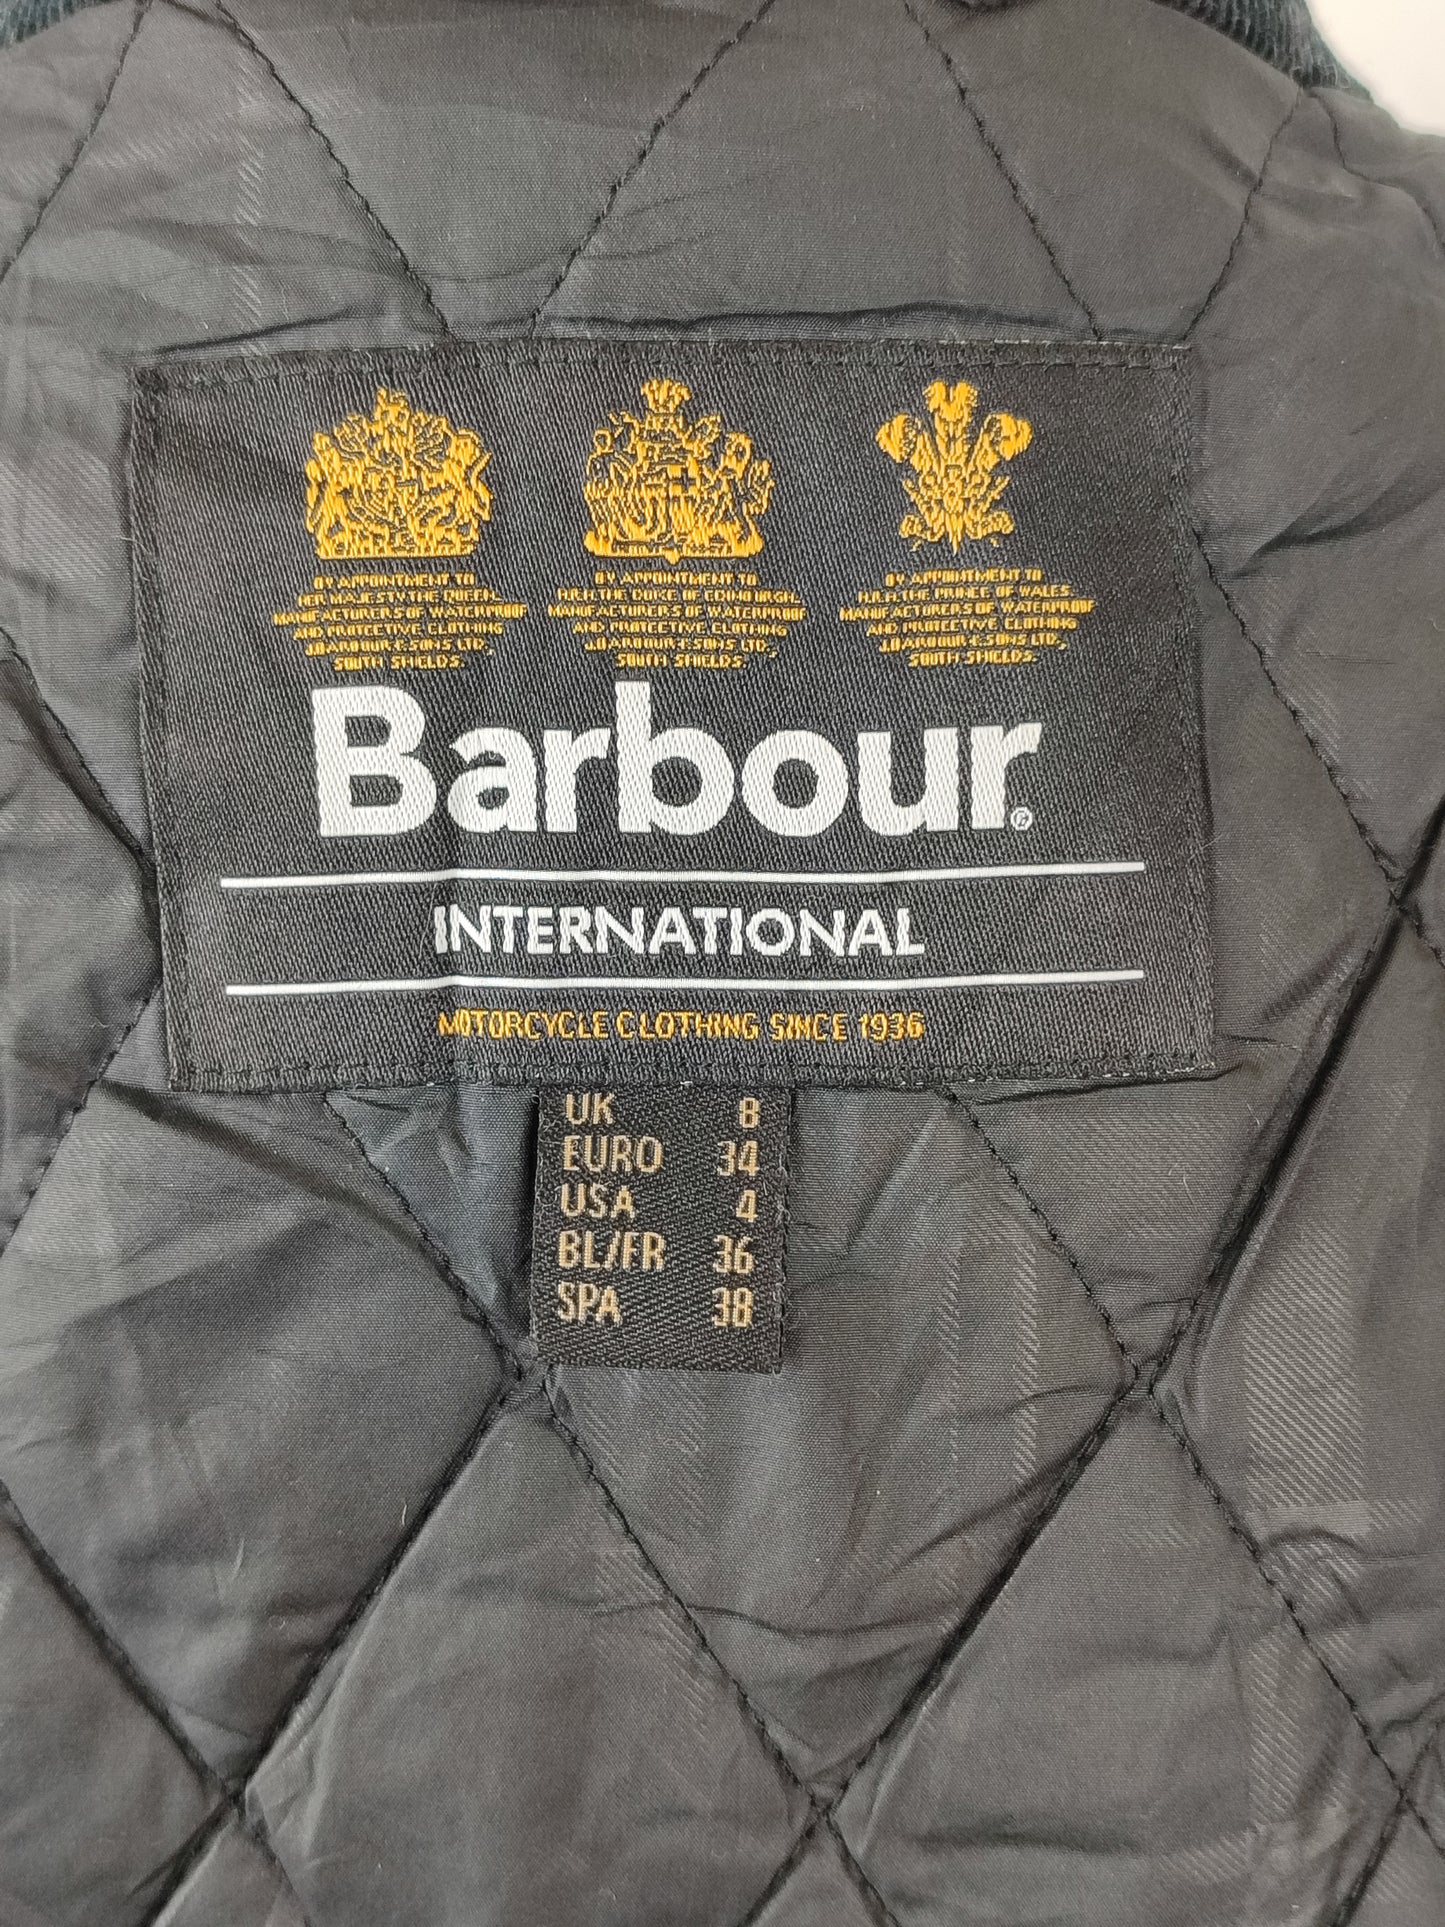 Giacca Barbour International da donna blu uk8 Xsmall -Lady Navy wax Fins jacket size UK8